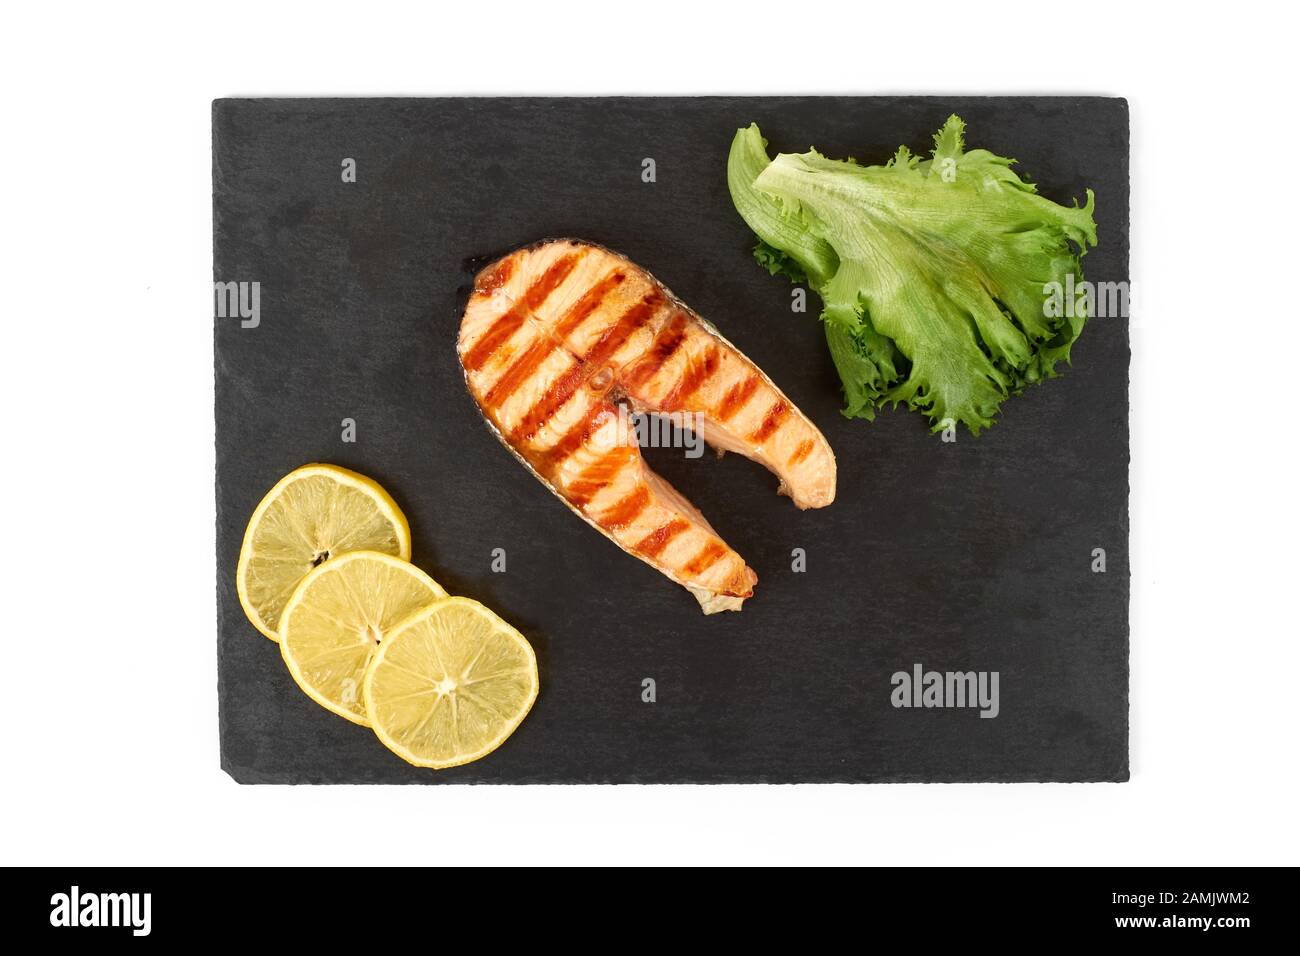 Roasted salmon steak with lemon and salad on slate. Isolated on white background Stock Photo